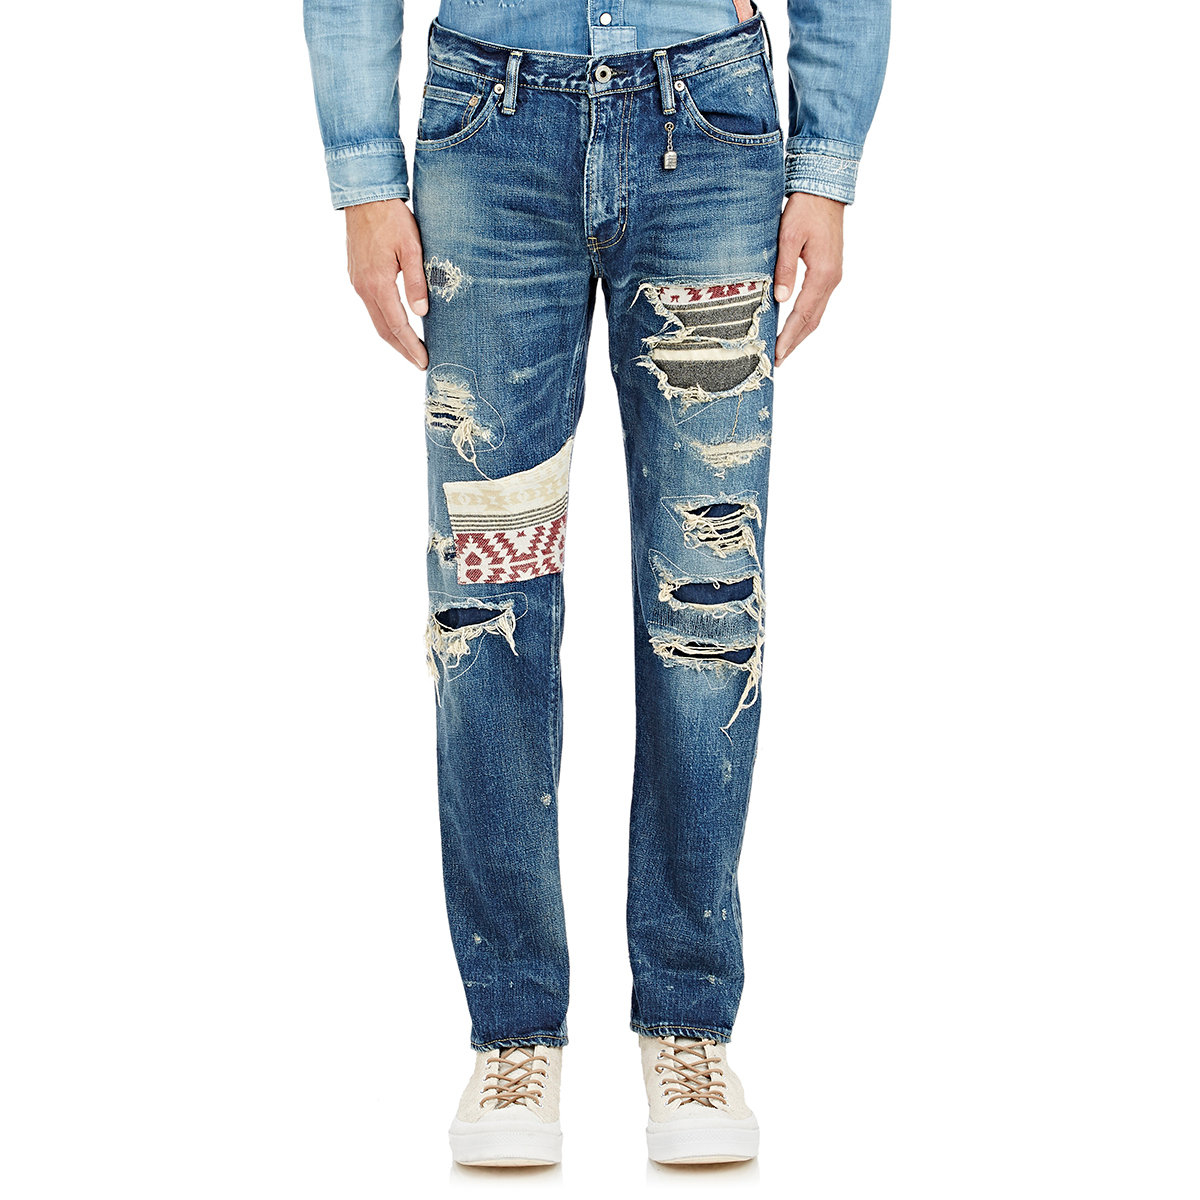 Lyst - Fdmtl Distressed Patchwork Jeans in Blue for Men